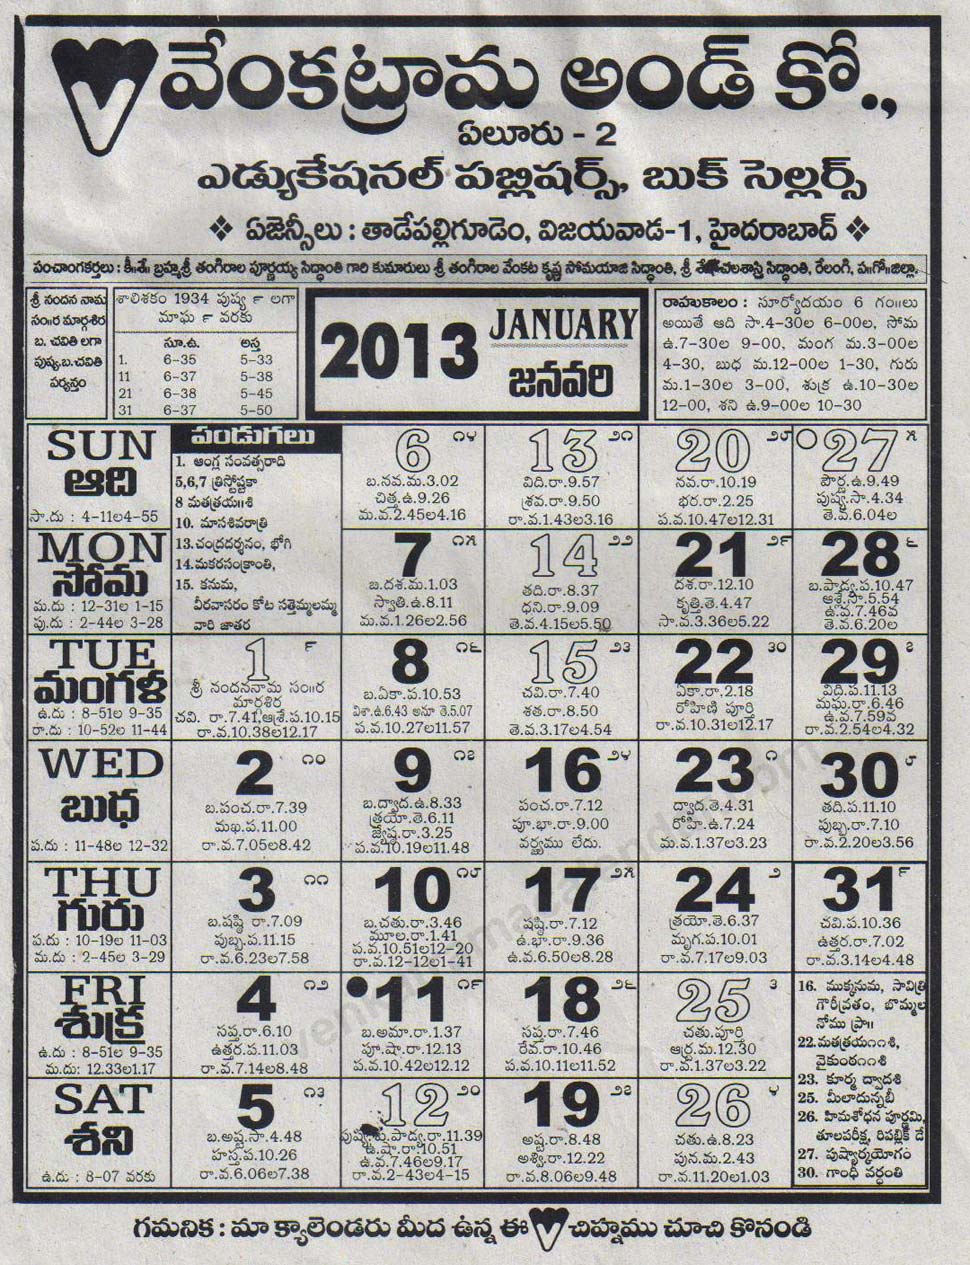 Venkatrama & Co., Telugu Calendar 2013 January with Festivals and Holidays.